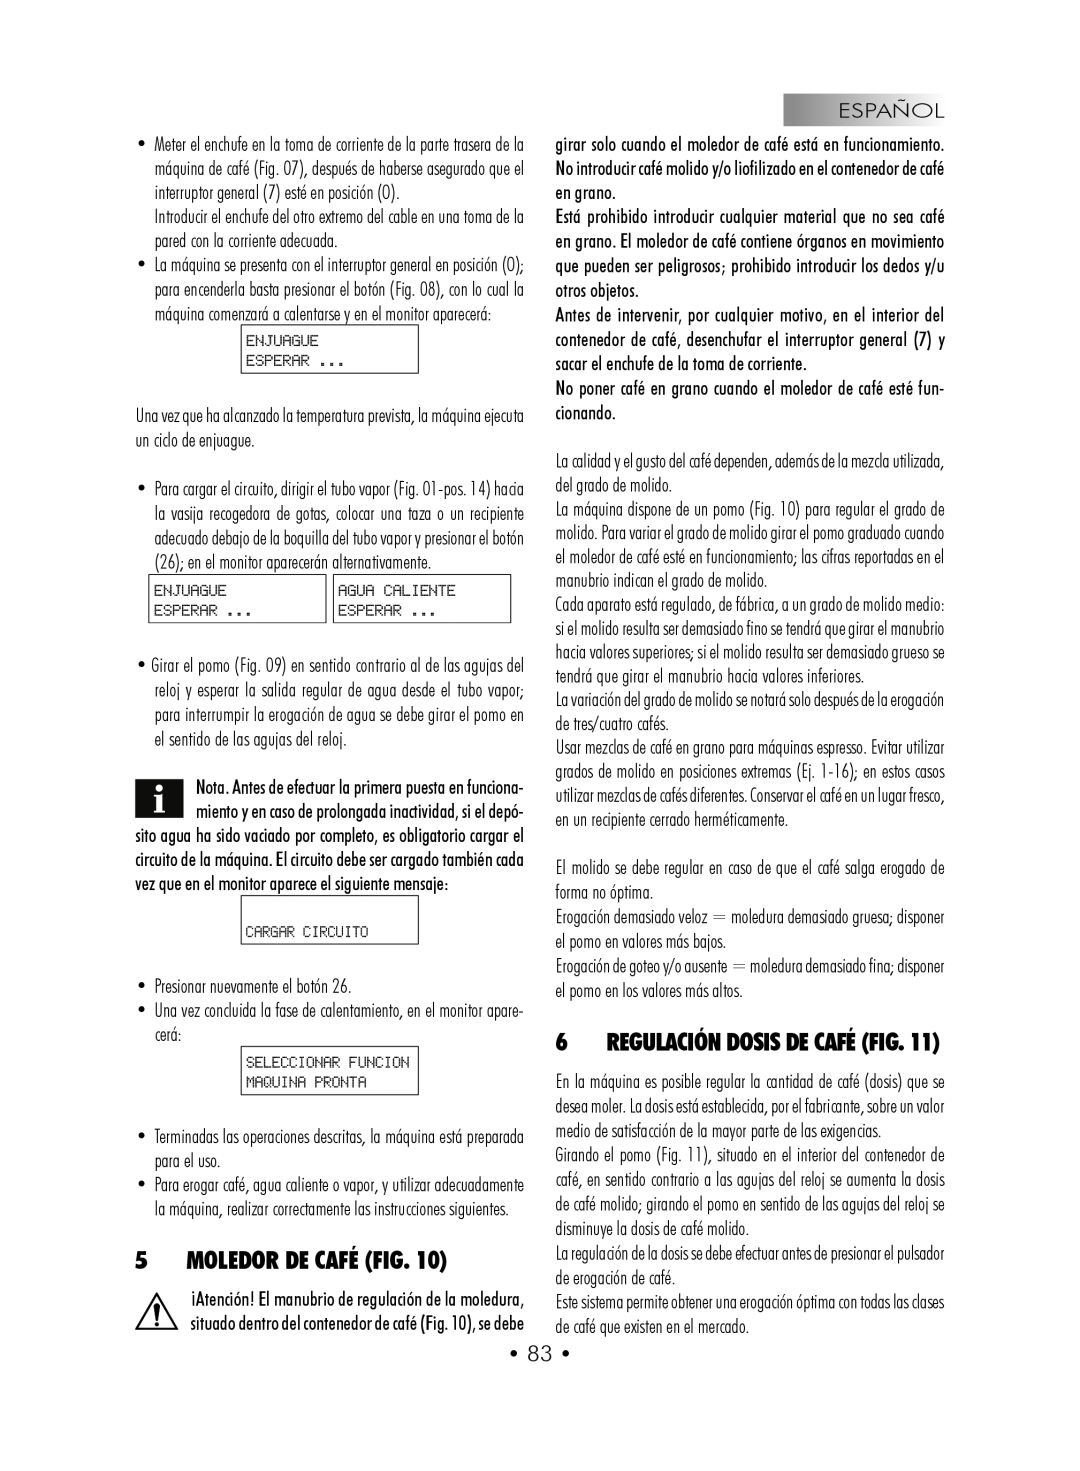 Gaggia SUP027YDR manual MOLEDOR DE CAFÉ Fig, REGULACIÓN DOSIS DE CAFÉ Fig 